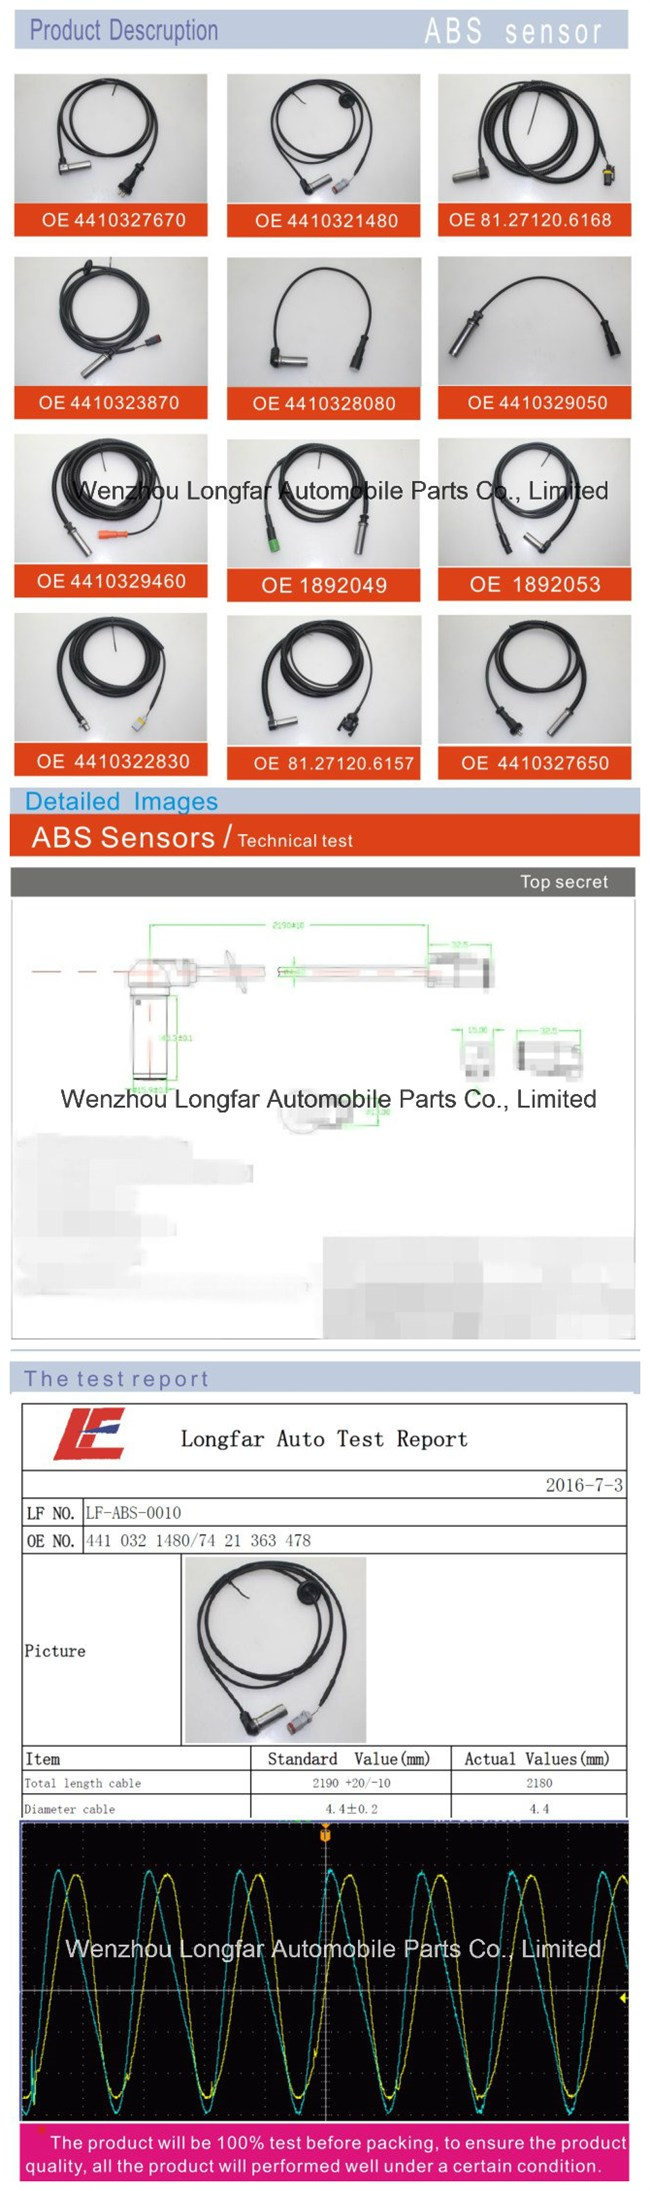 Auto Truck ABS Sensor Anti-Lock Braking System Transducer Indicator Sensor 4410329050, 02.3317.07.00, 6.61924, 096.249 for Mercedes-Benz, Scania, Daf, Renault